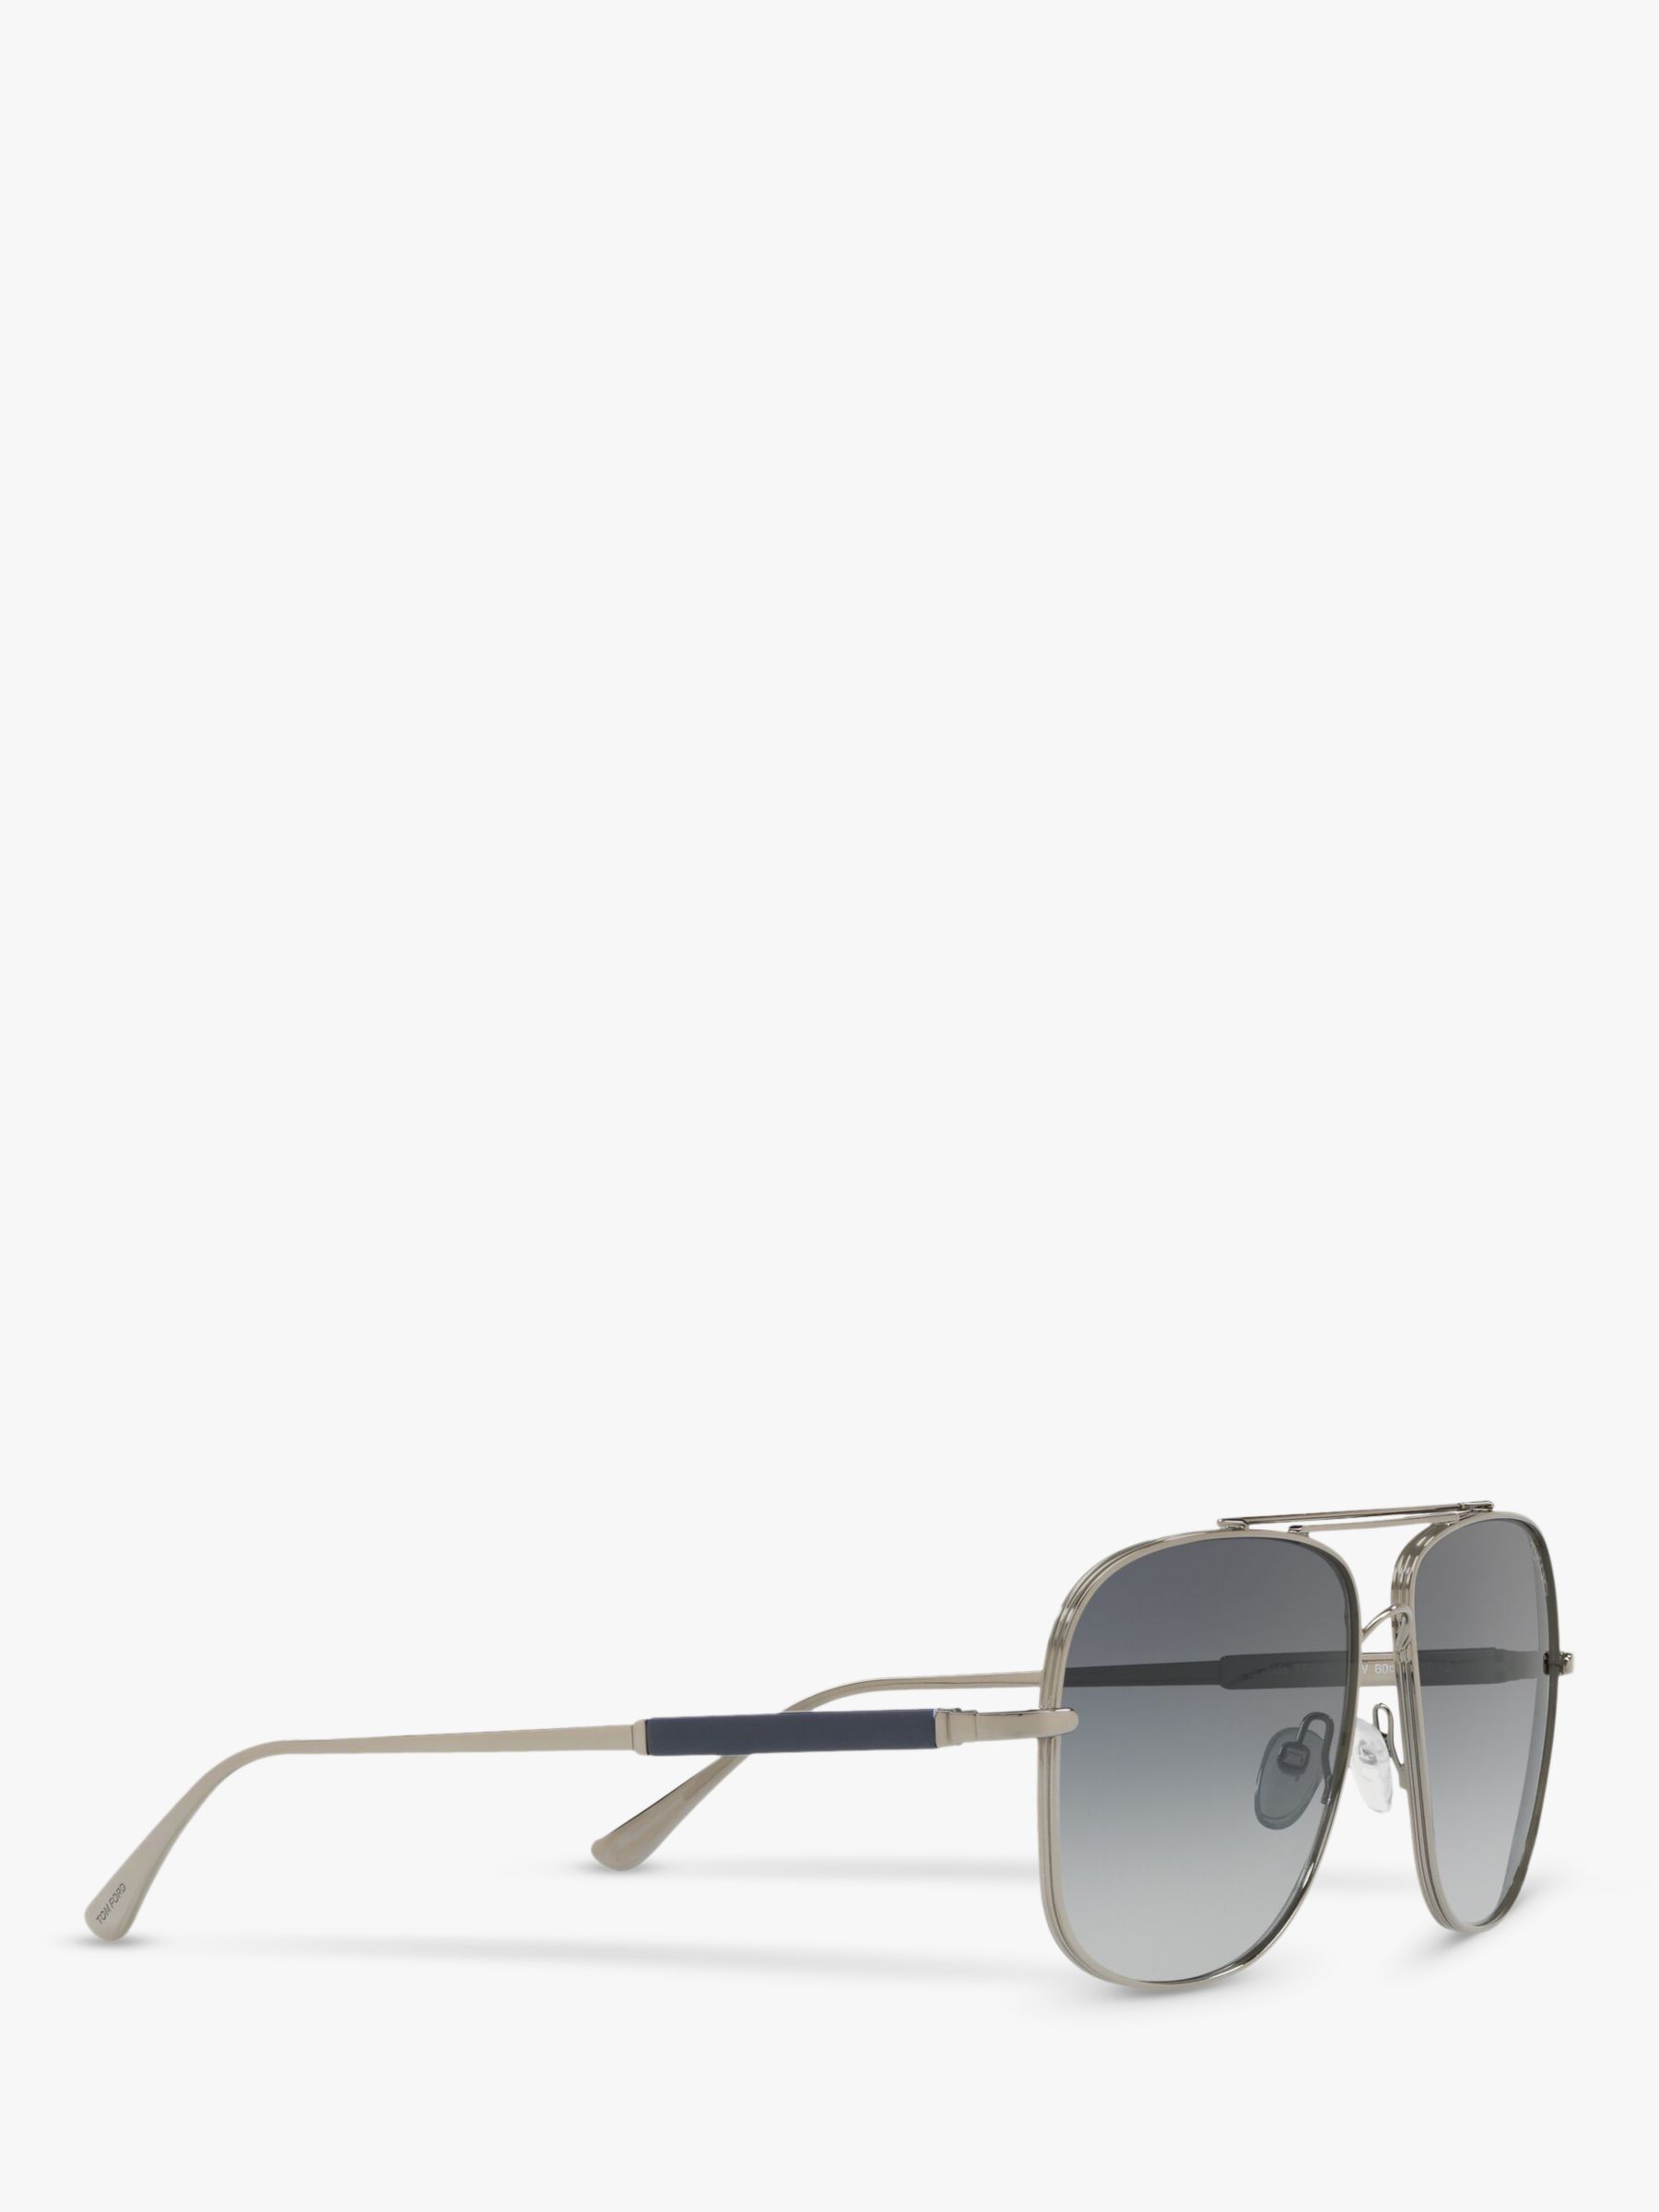 TOM FORD FT0669 Men's Square Sunglasses, Gunmetal/Blue Gradient at John  Lewis & Partners